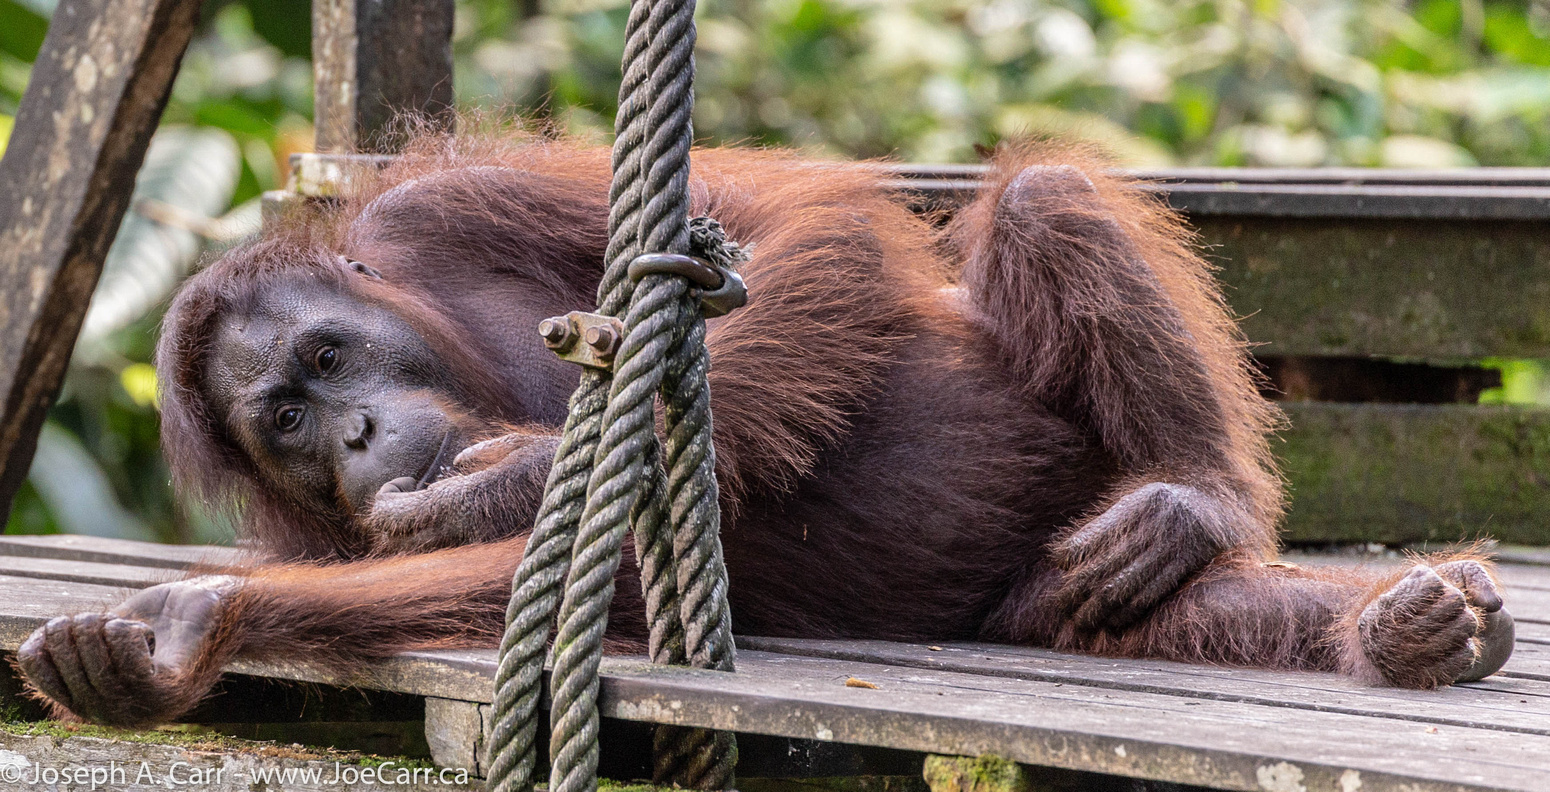 Orangutan reclining on the feeding platform